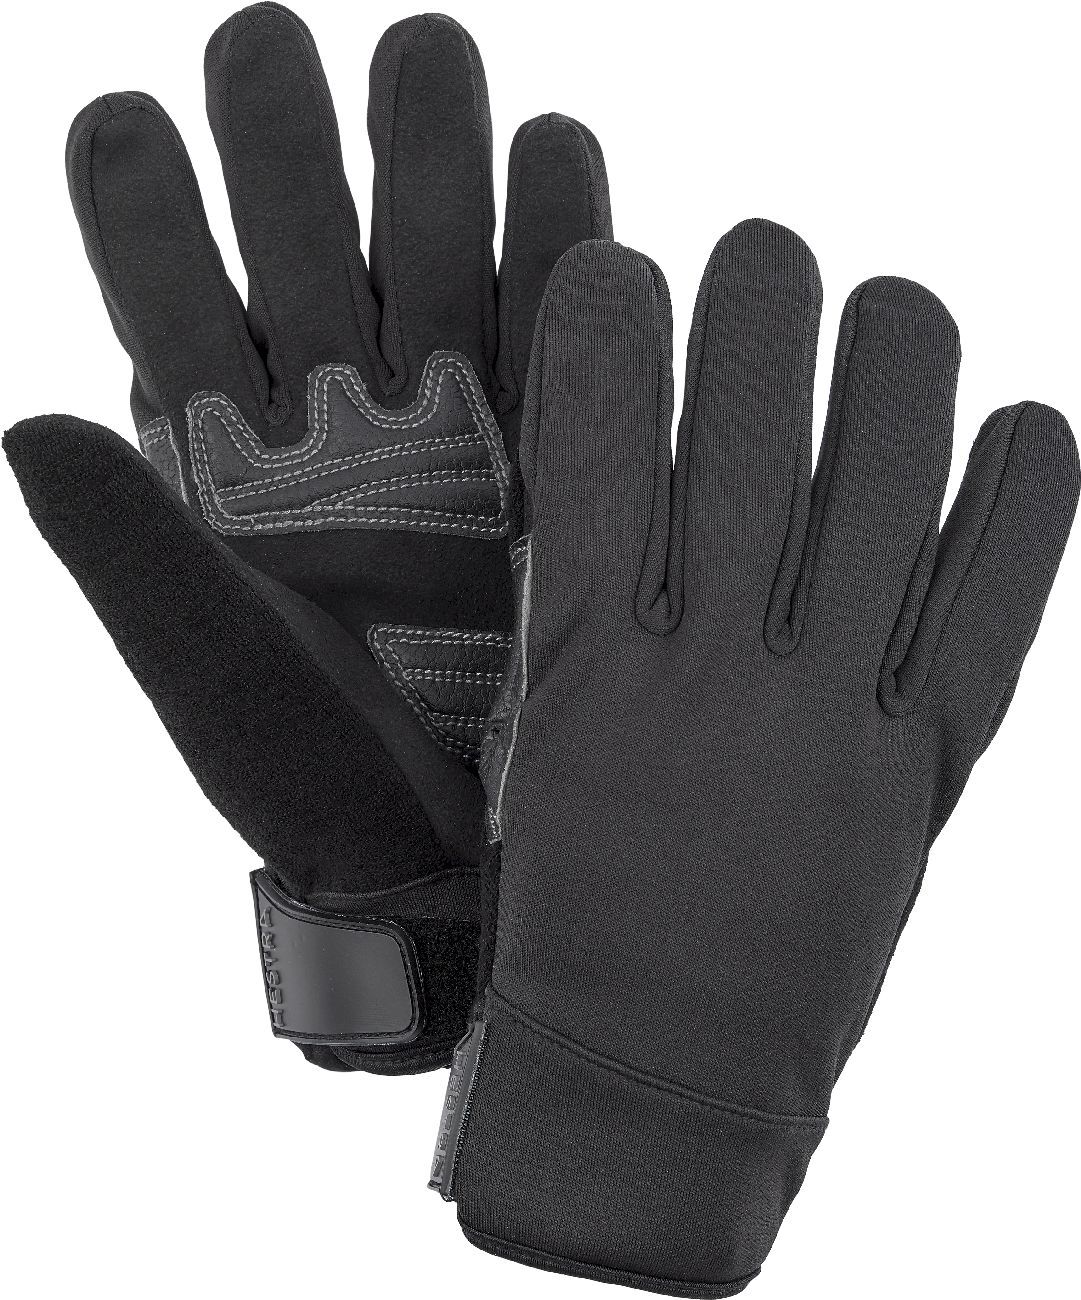 Hestra Tactility - Ski gloves